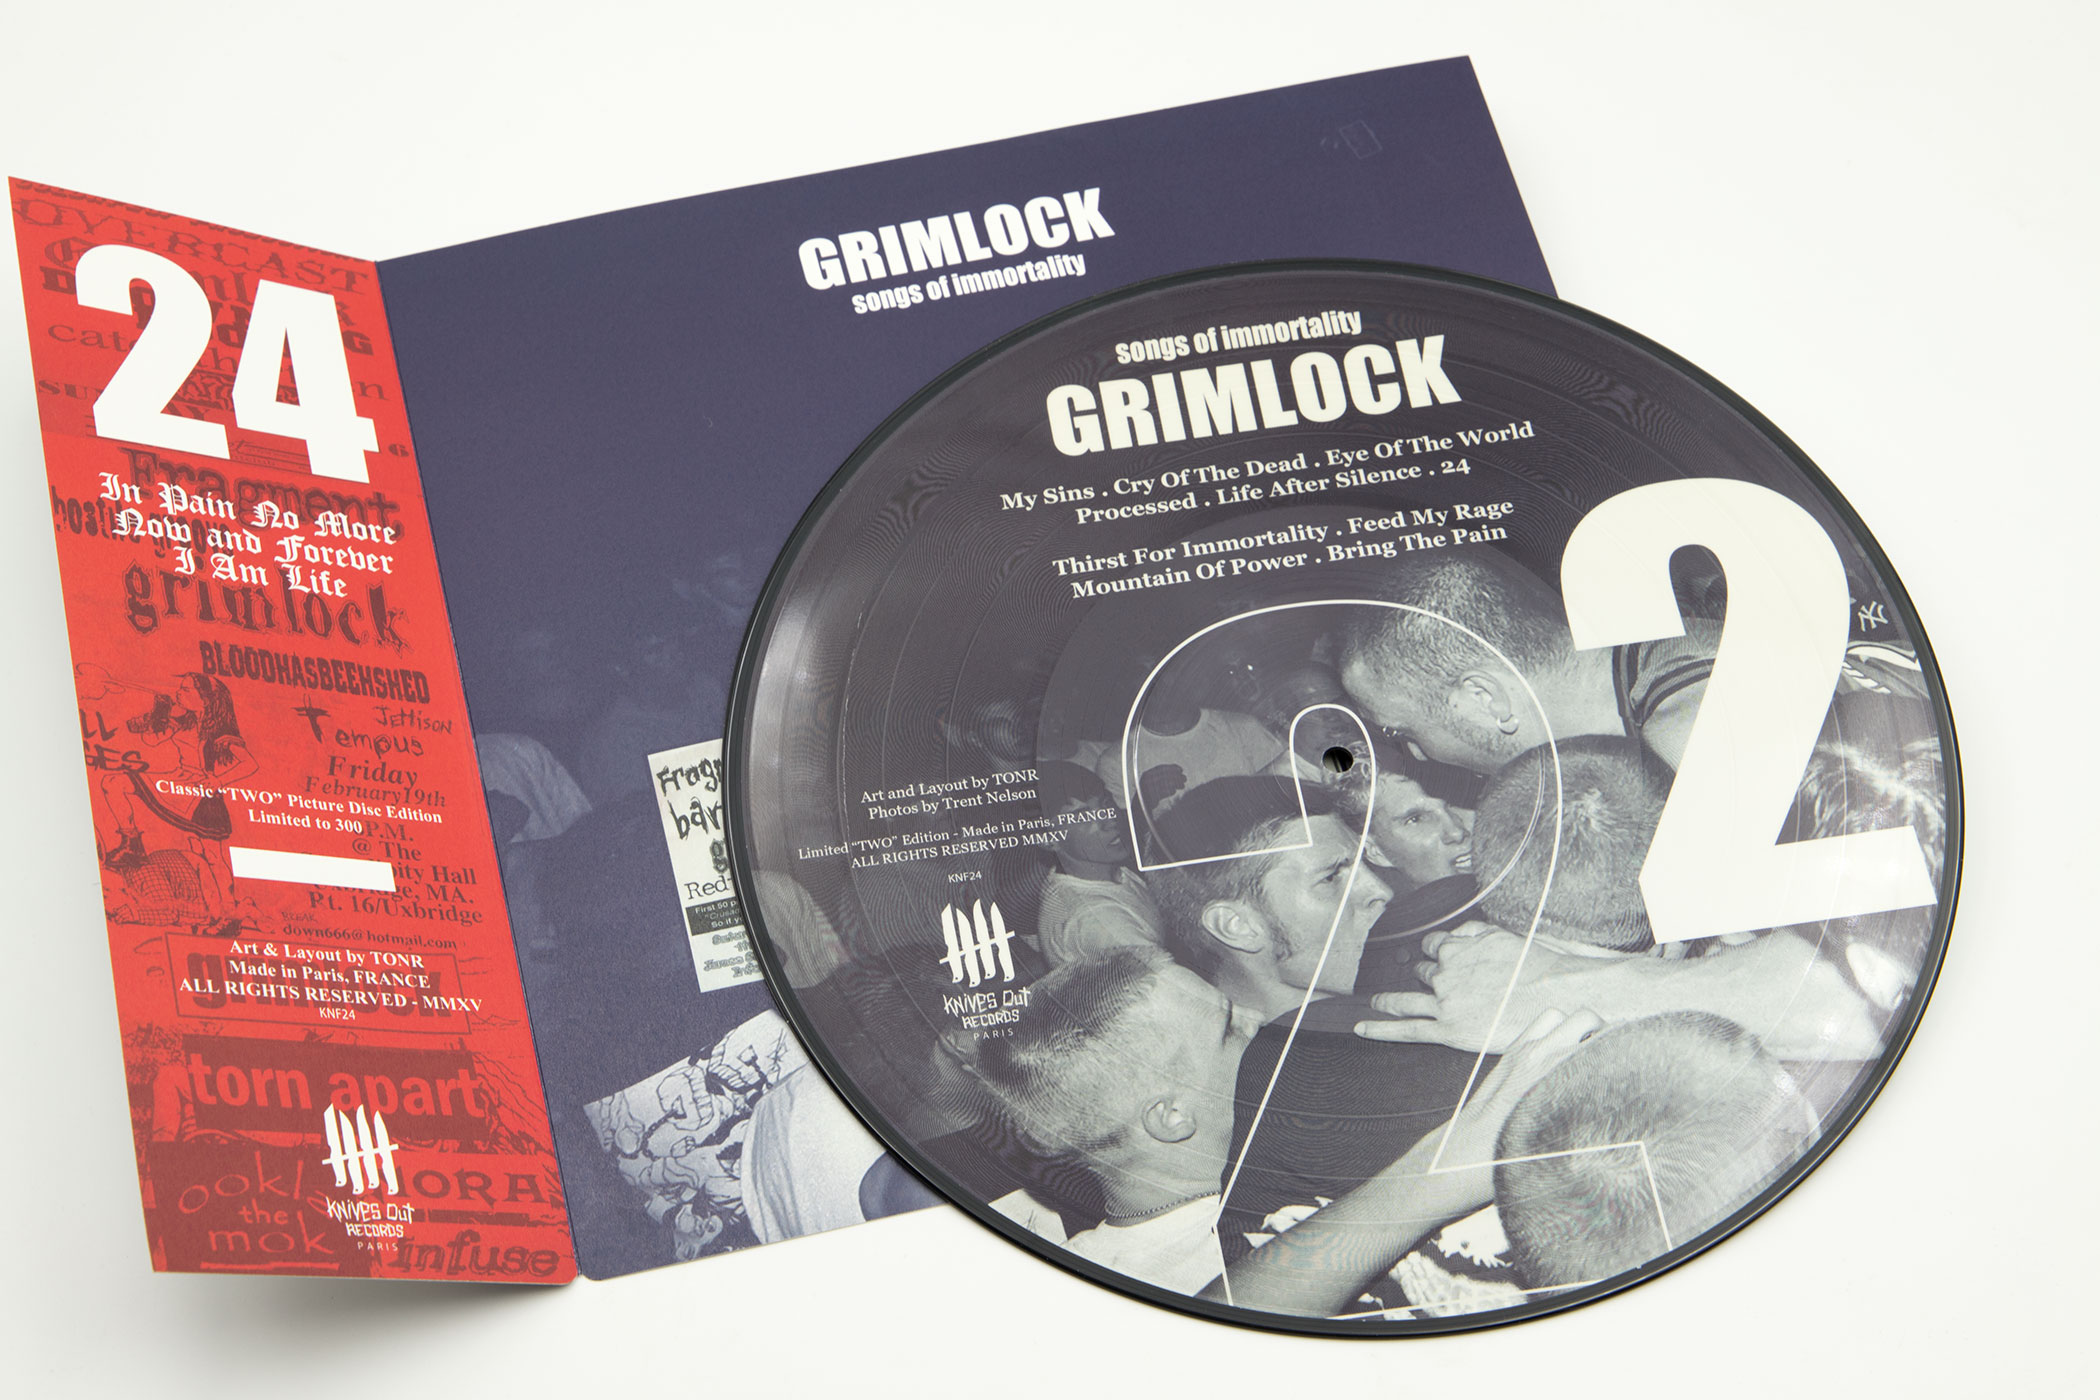 GRIMLOCK "Songs Of Immortality" Picture Disc 12" Vinyl